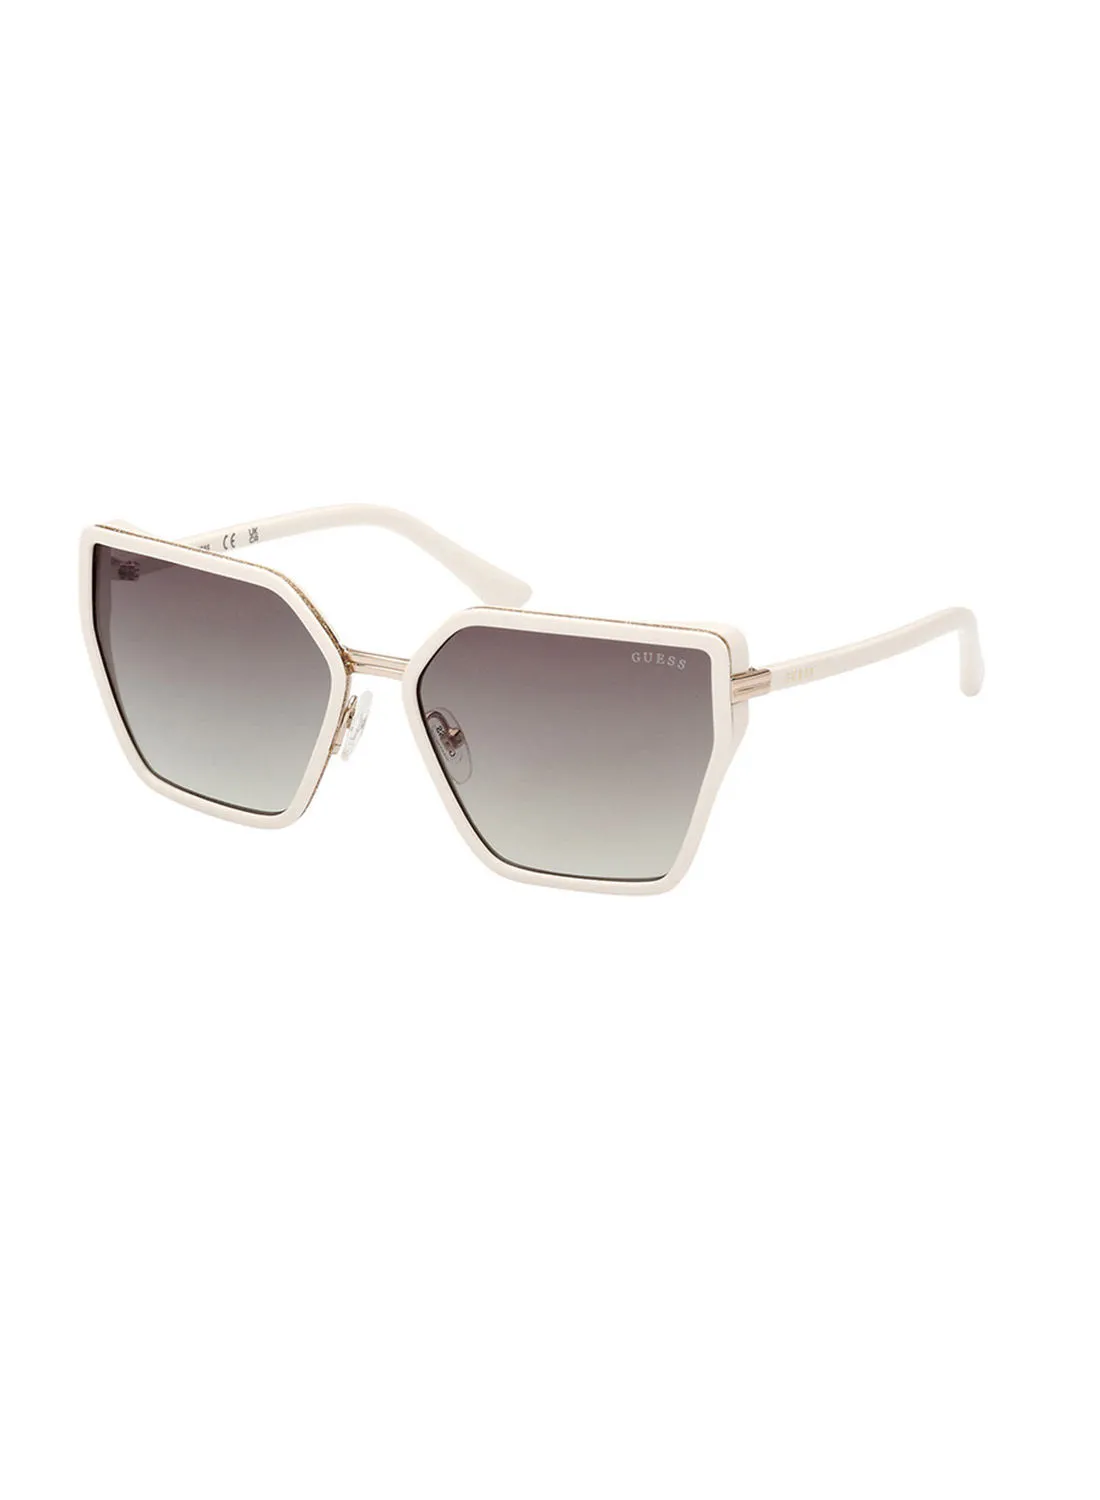 GUESS Sunglasses For Women GU787121P59